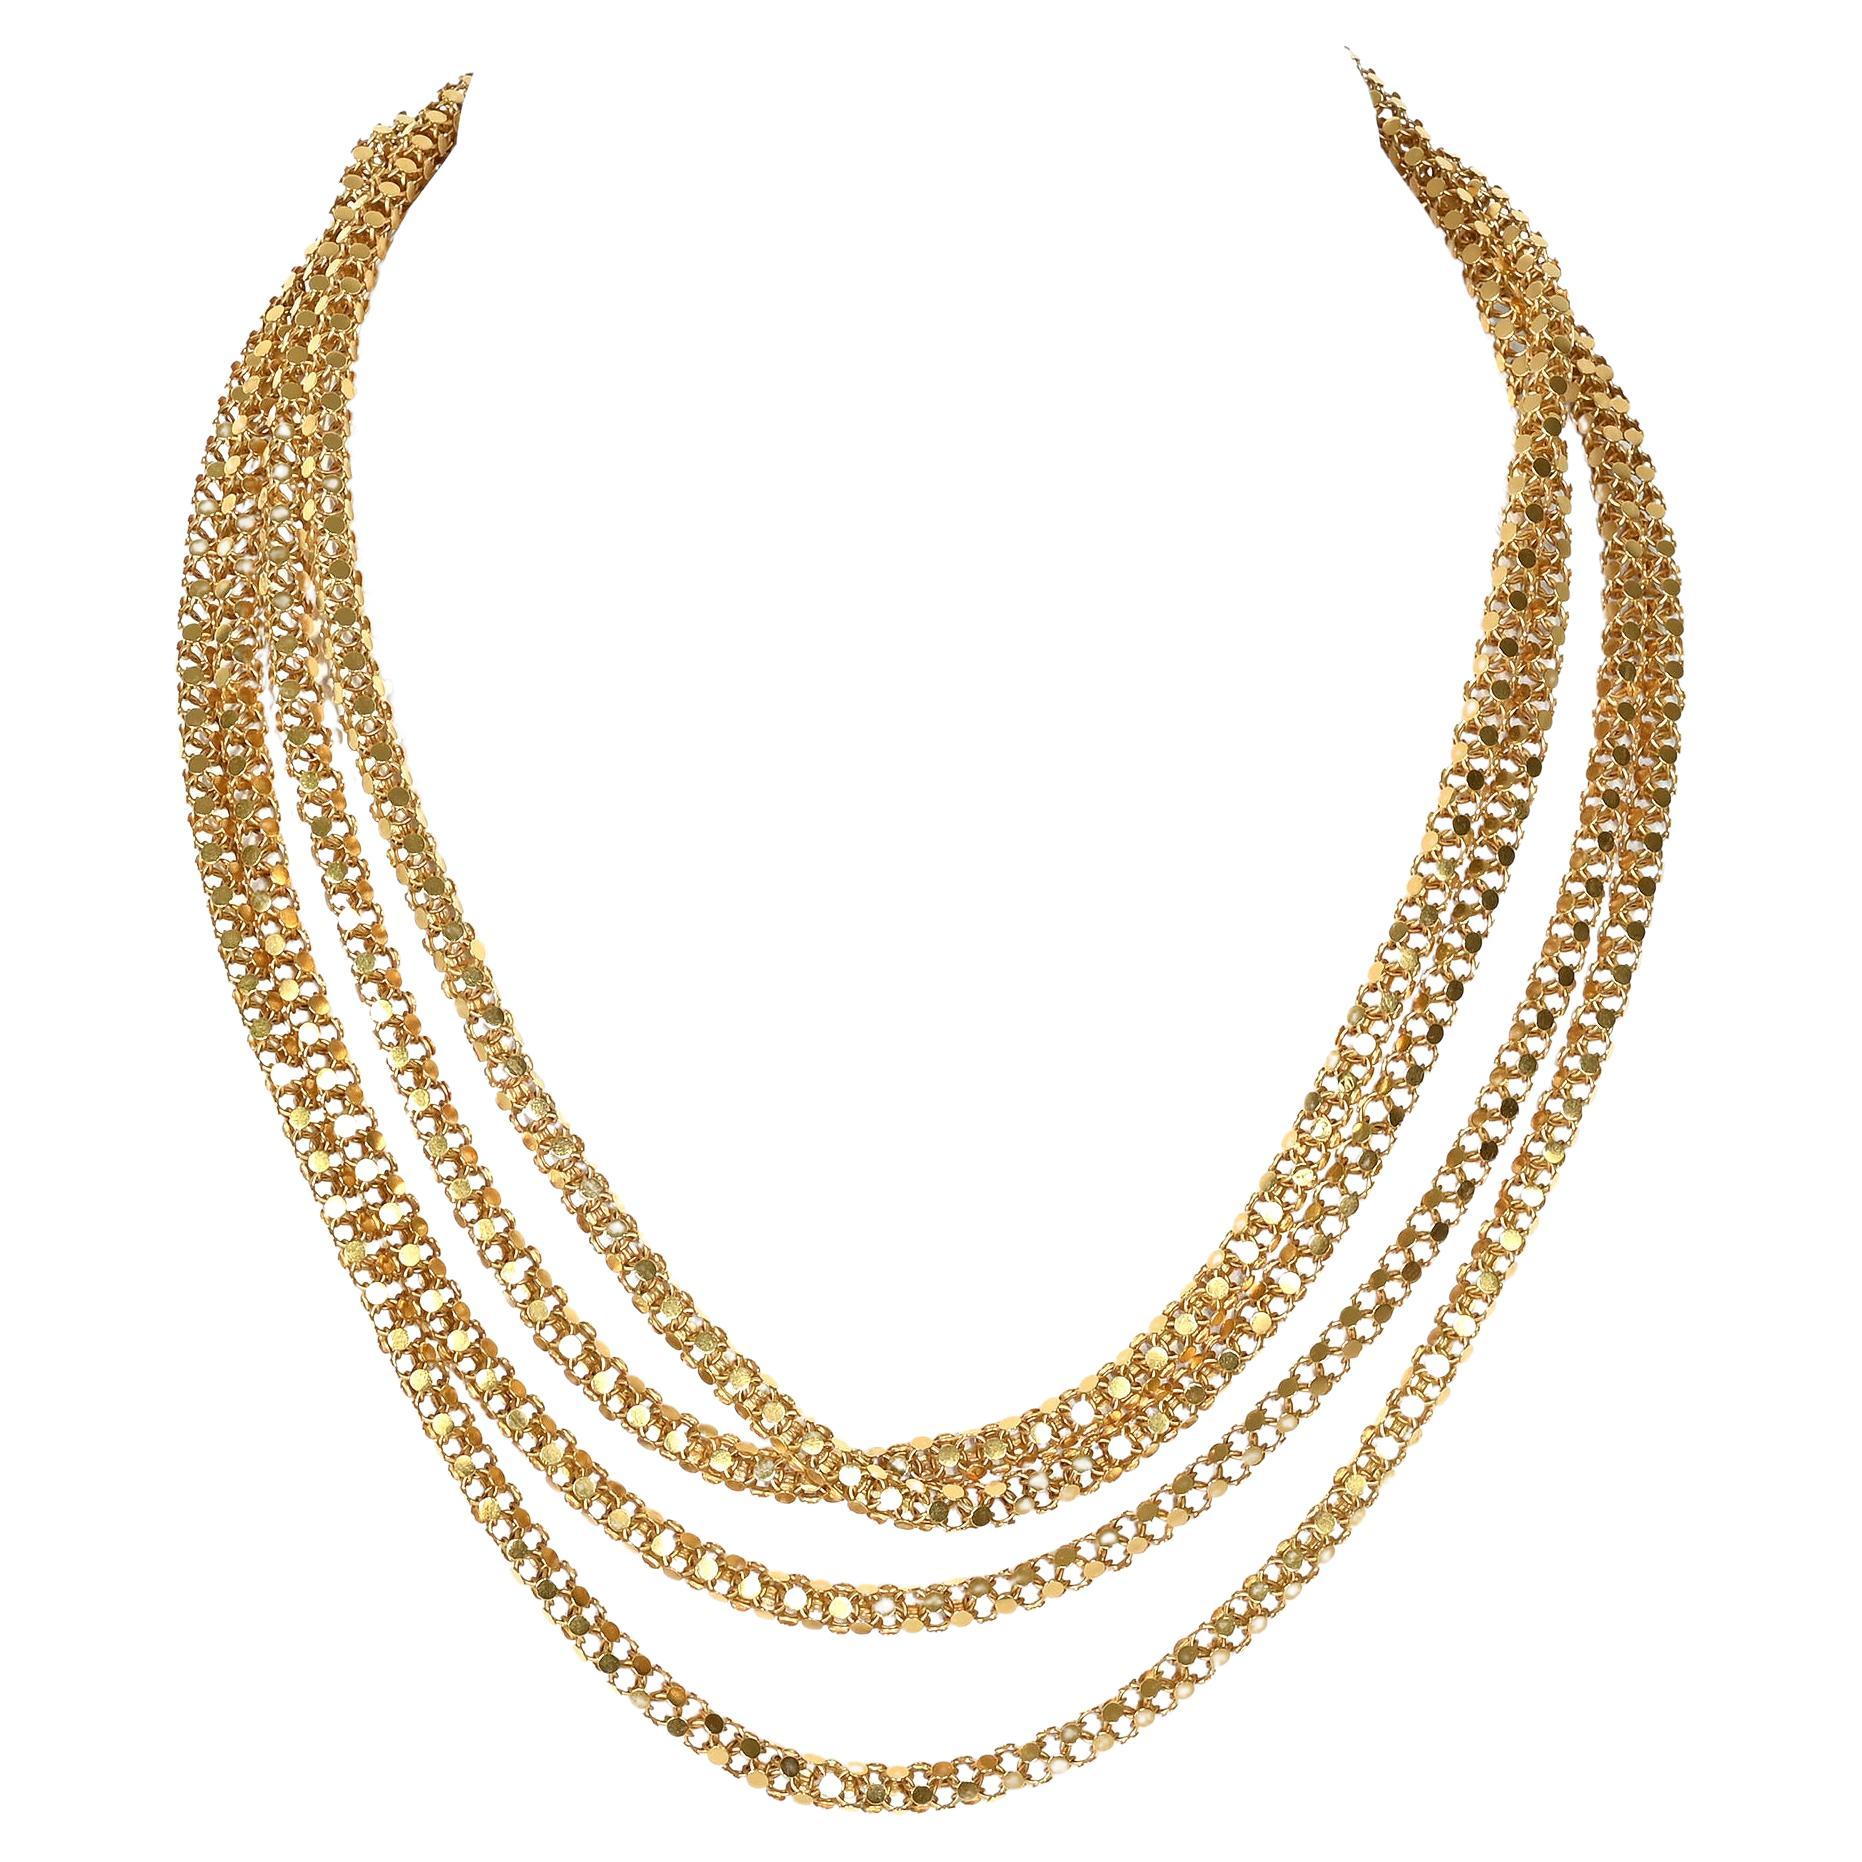 Handgefertigte lange Goldkette Halskette